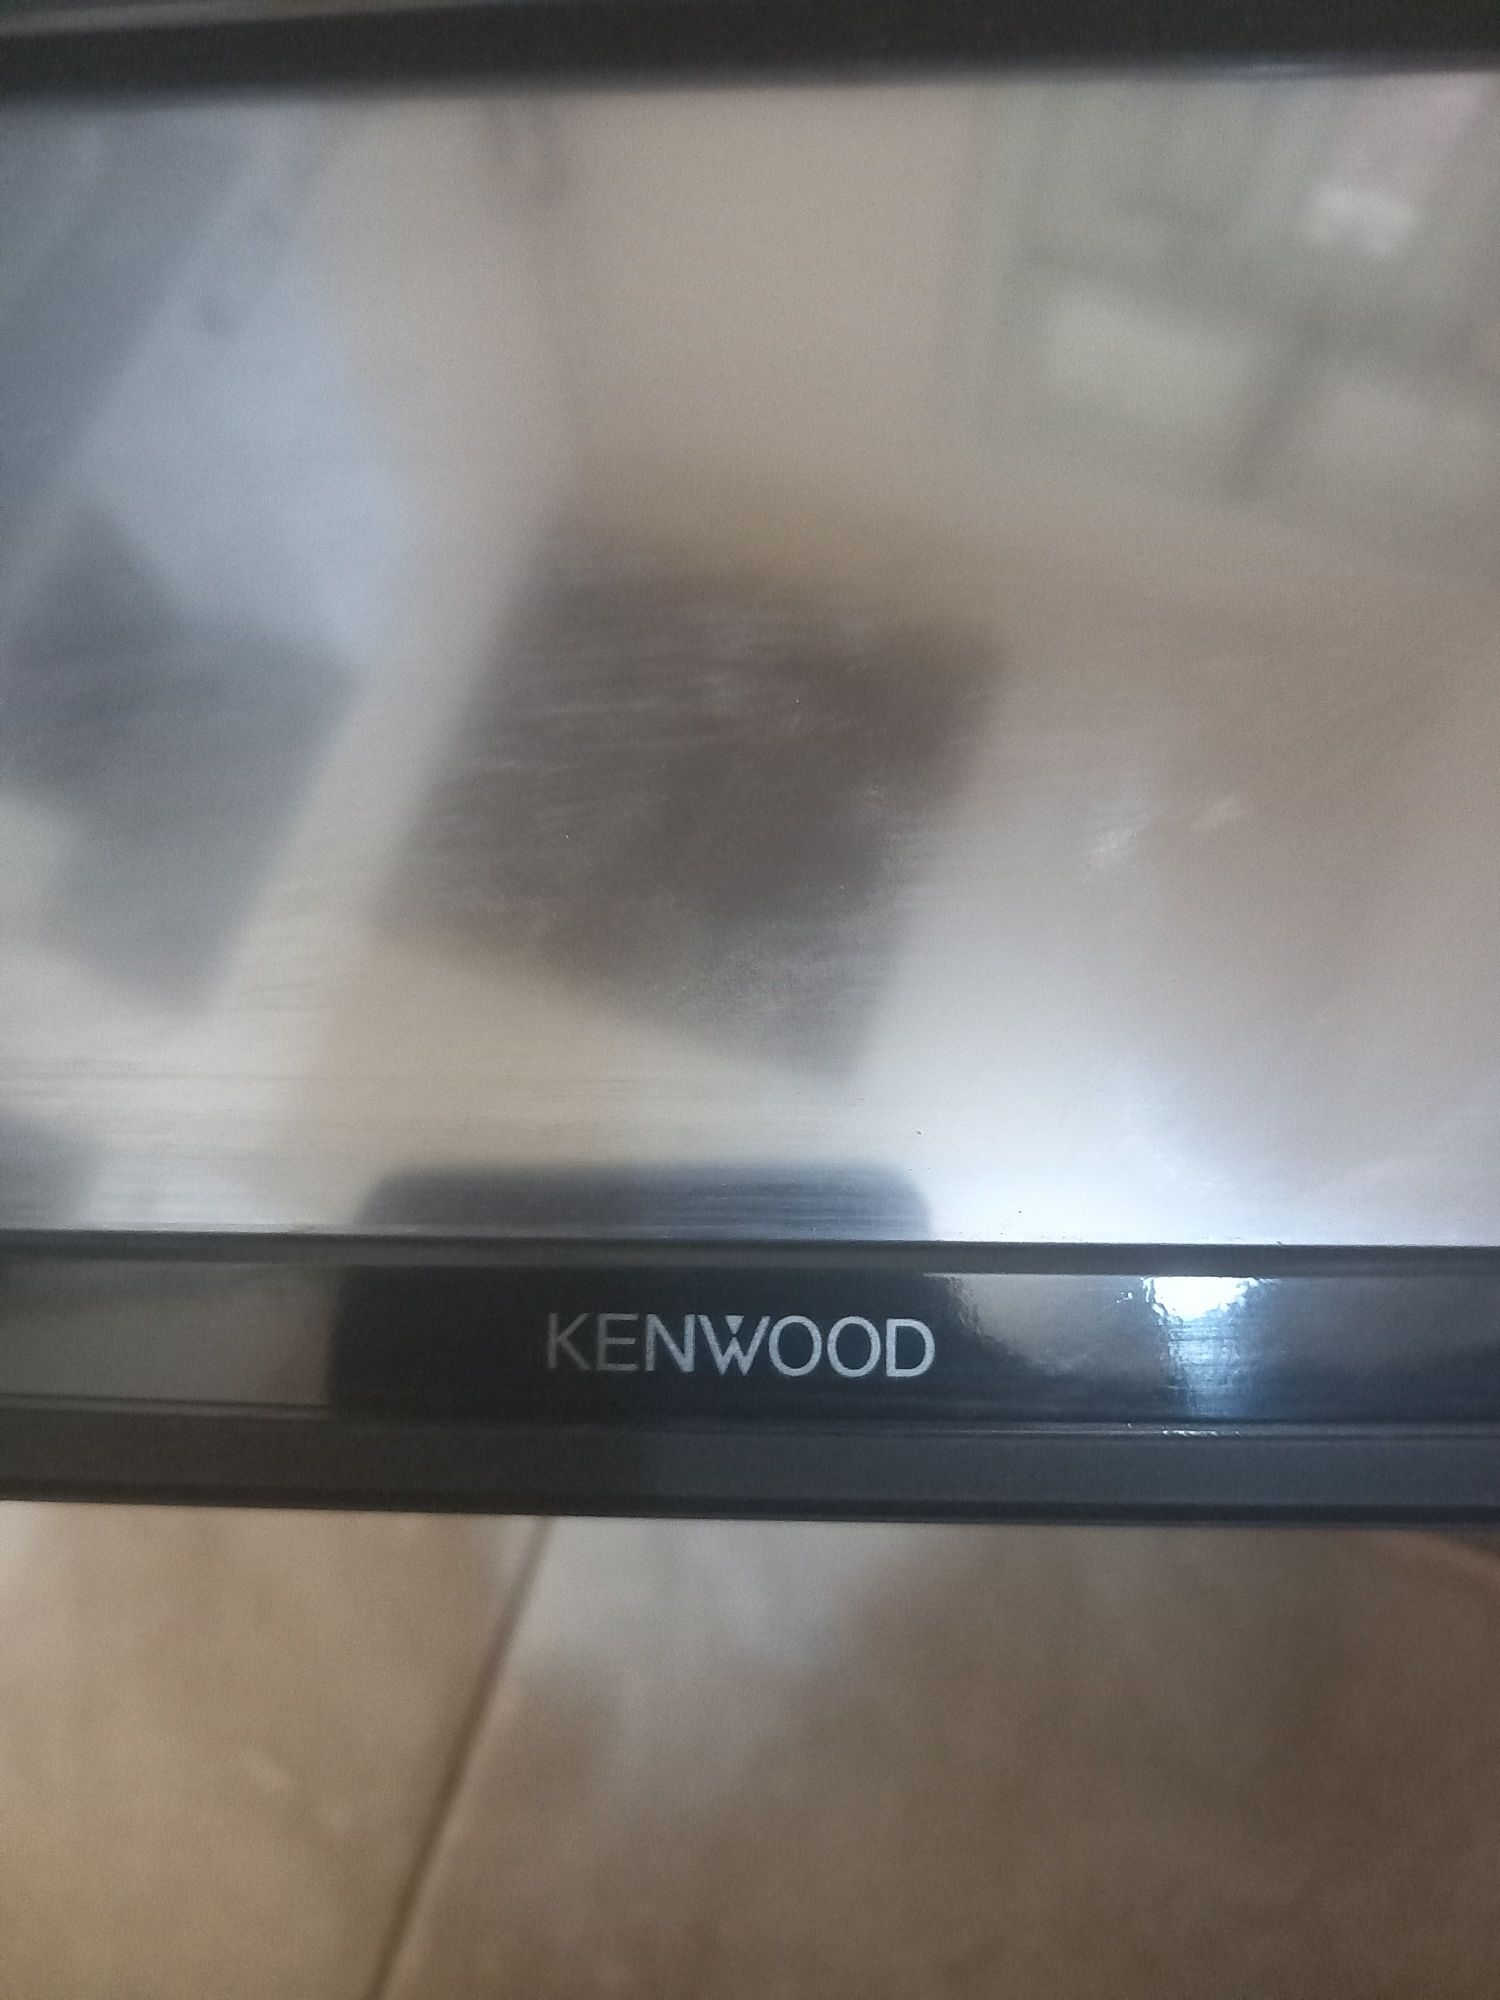 Kenwood navigație și multimedia